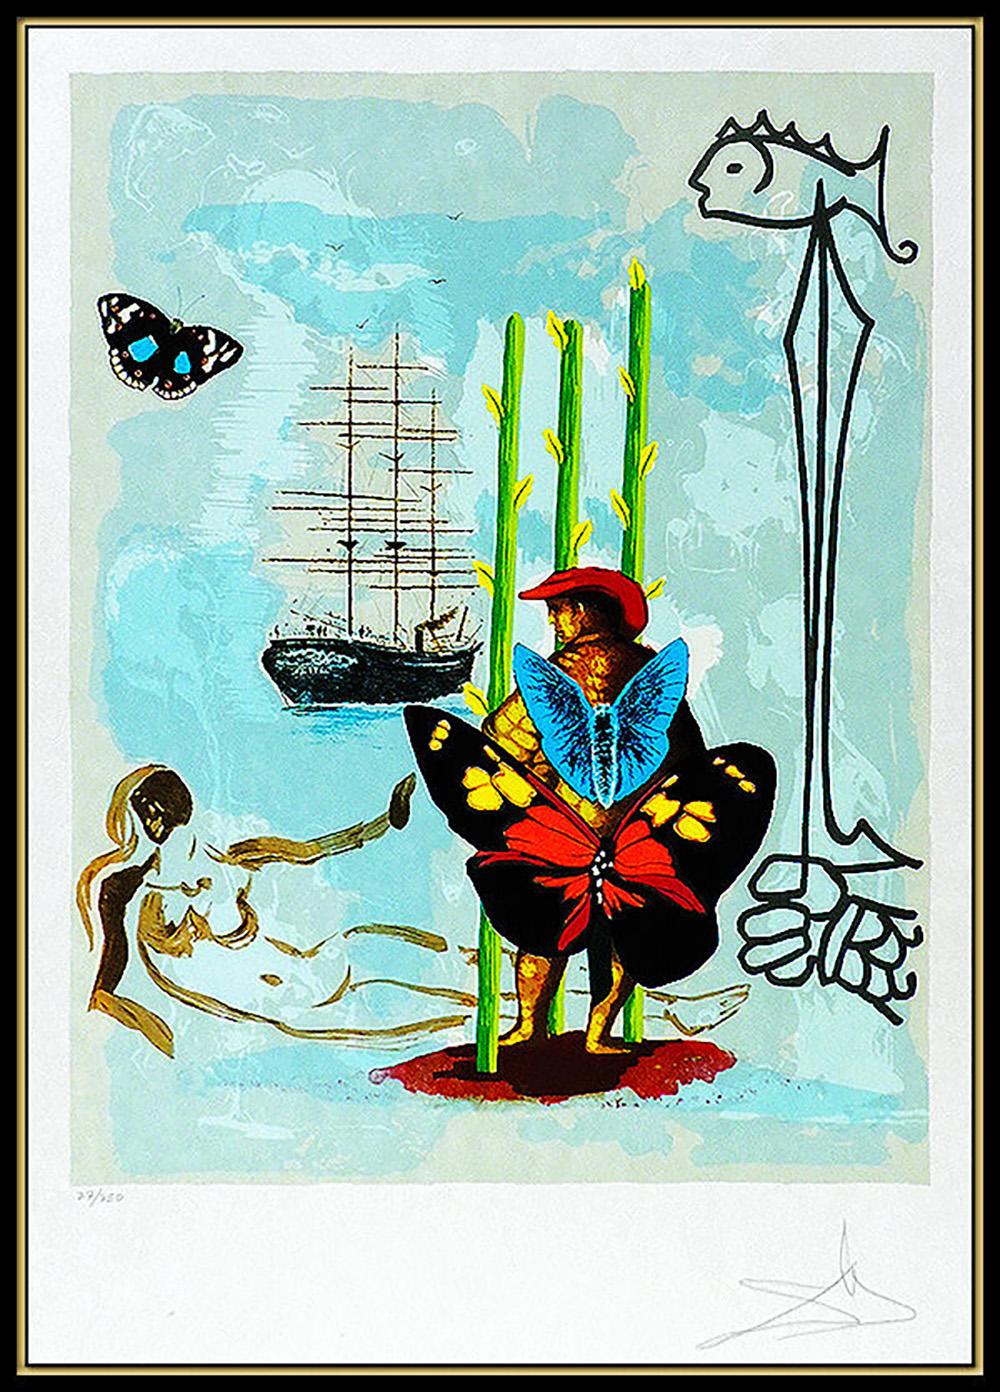 Salvador Dali Color Lithograph Hand Signed Dream of Freedom Nude Surreal Artwork - Print by Salvador Dalí